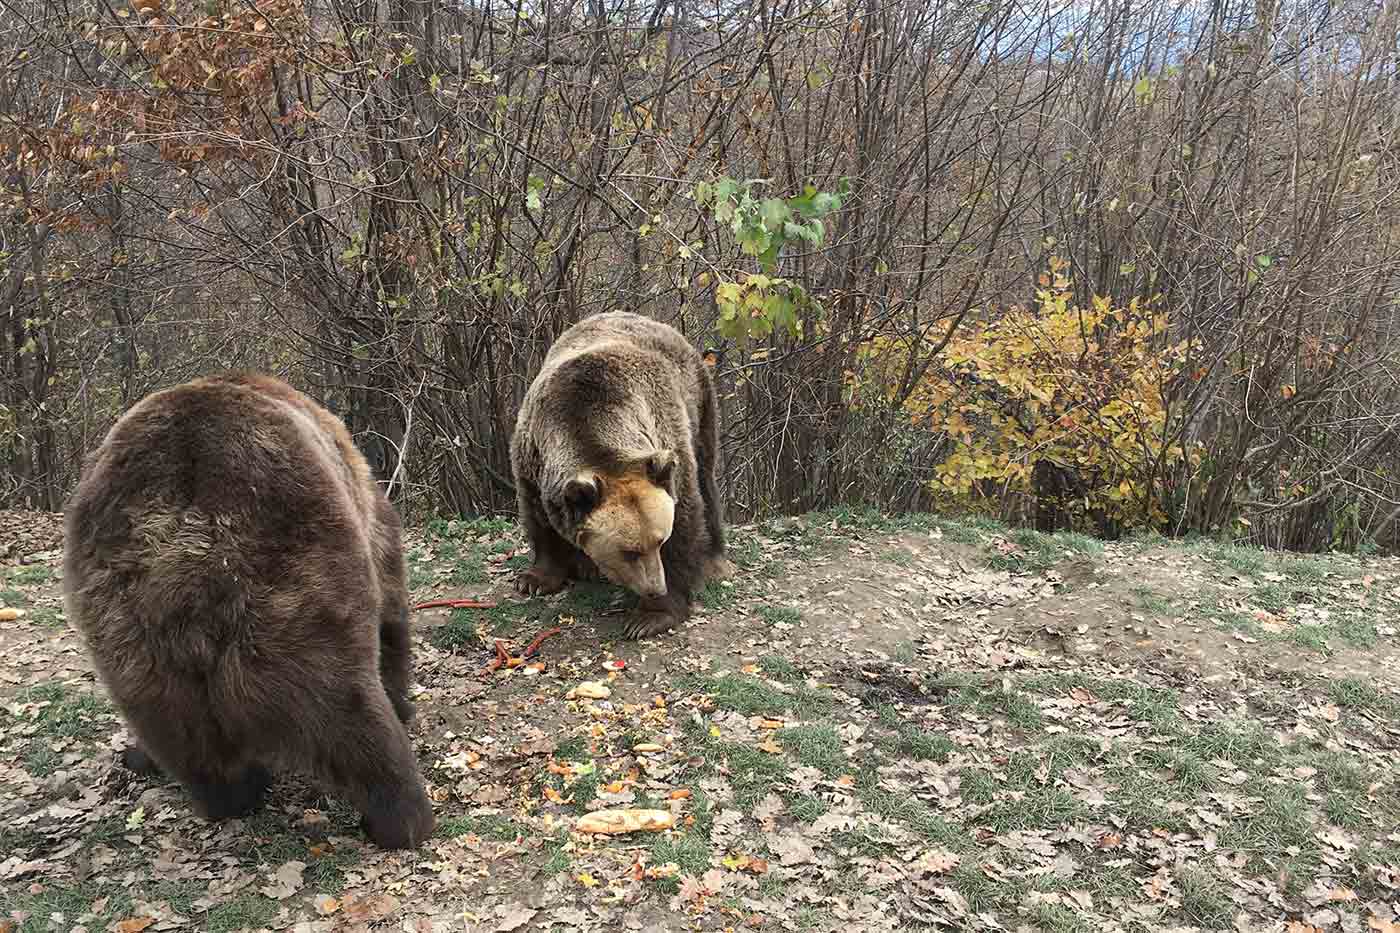 Libearty Bear Sanctuary